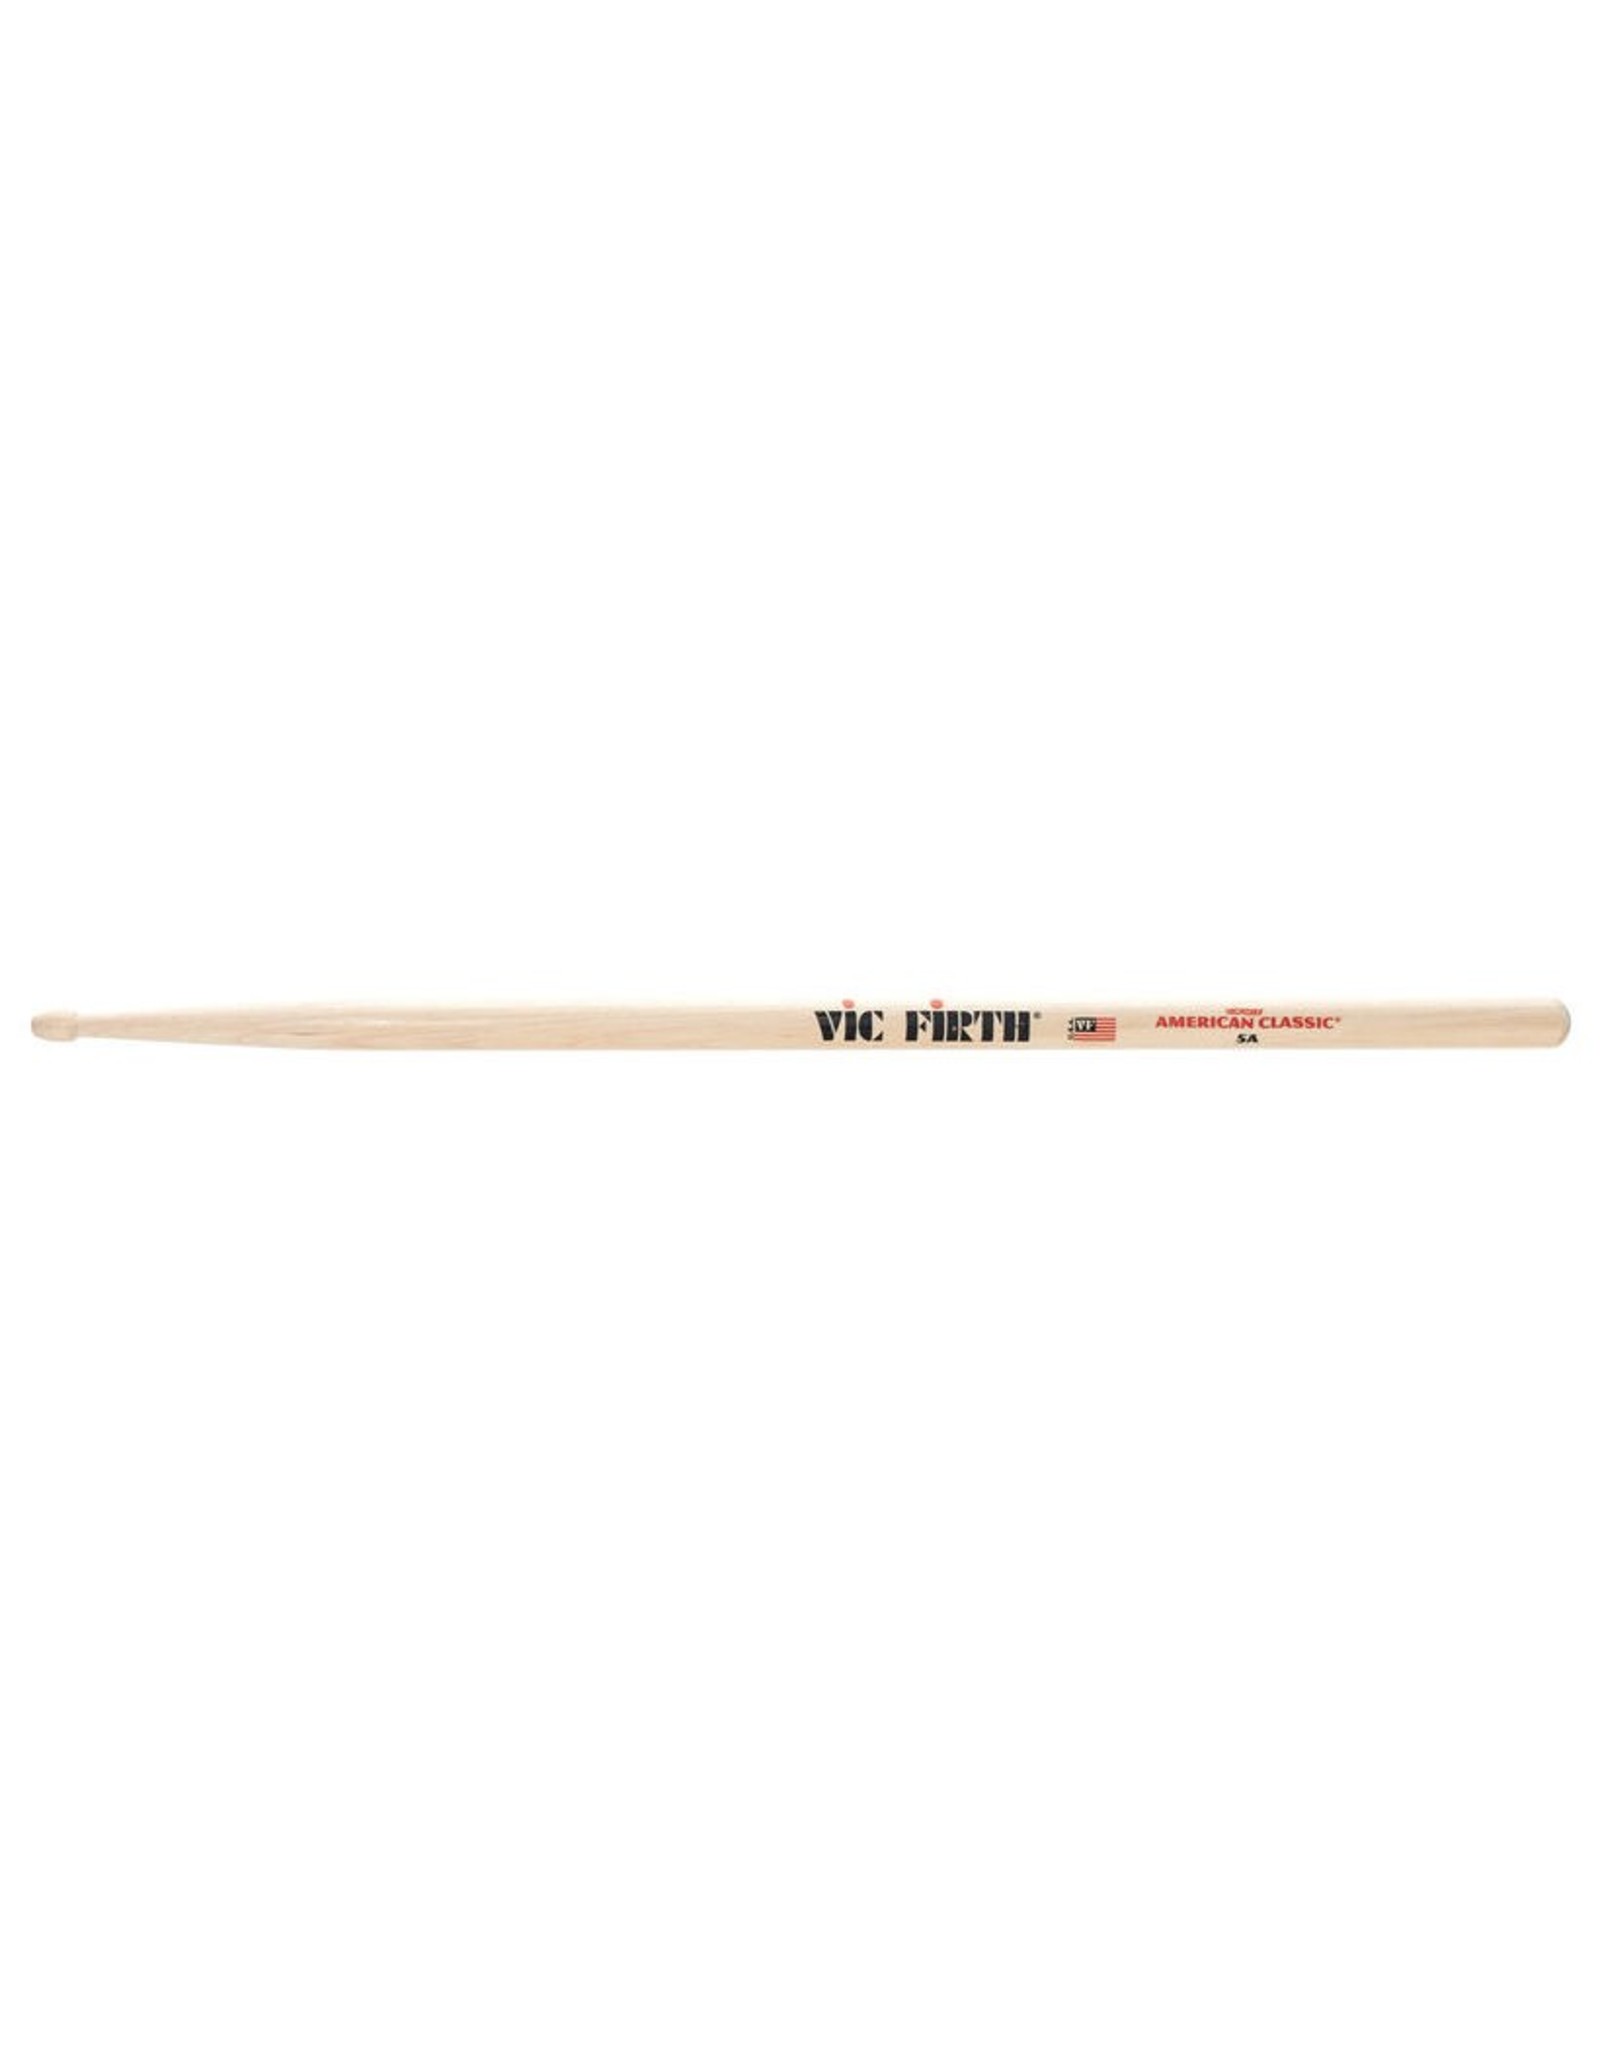 Vic Firth  5A drumsticks